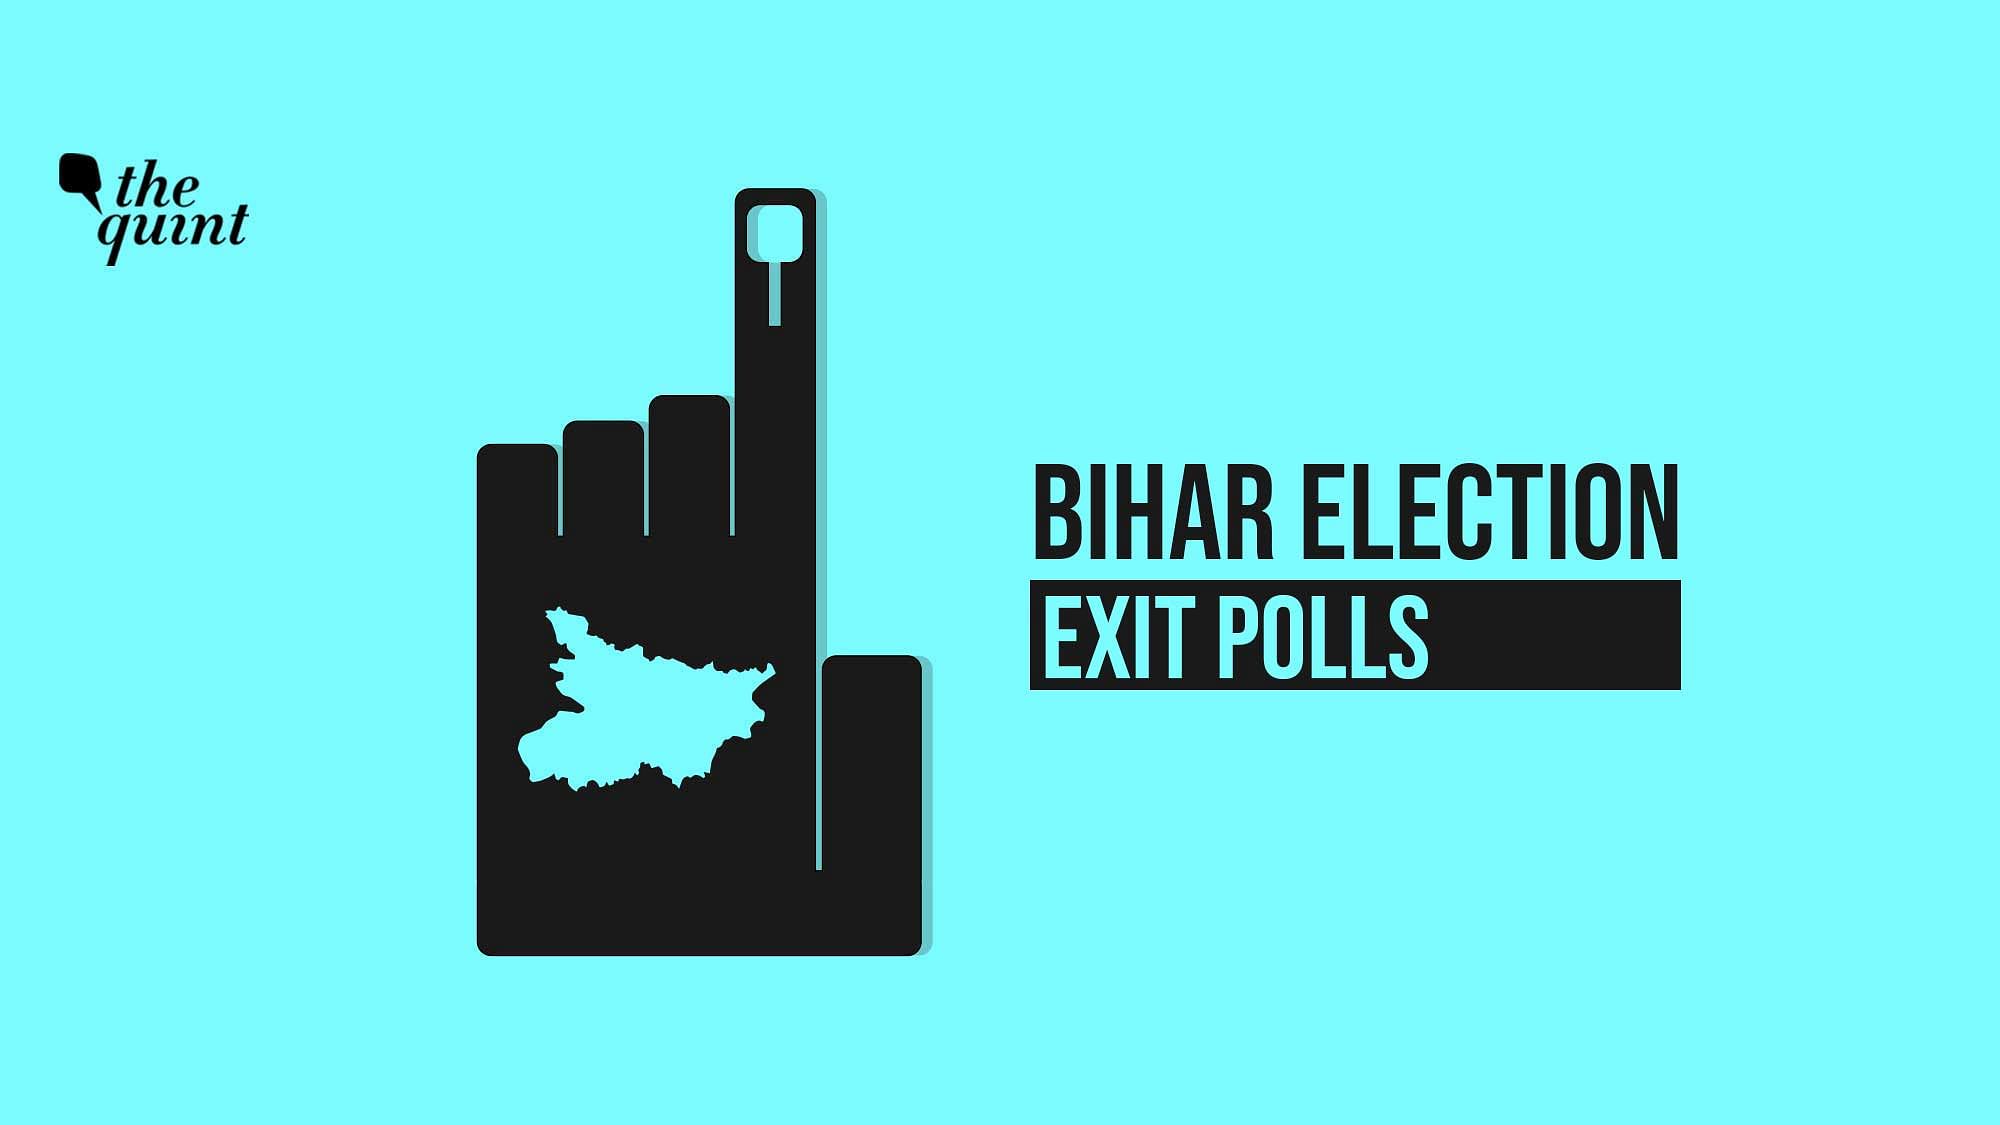 The Republic-Jan Ki Baat exit poll gave a clear edge to the Mahagathbandhan.